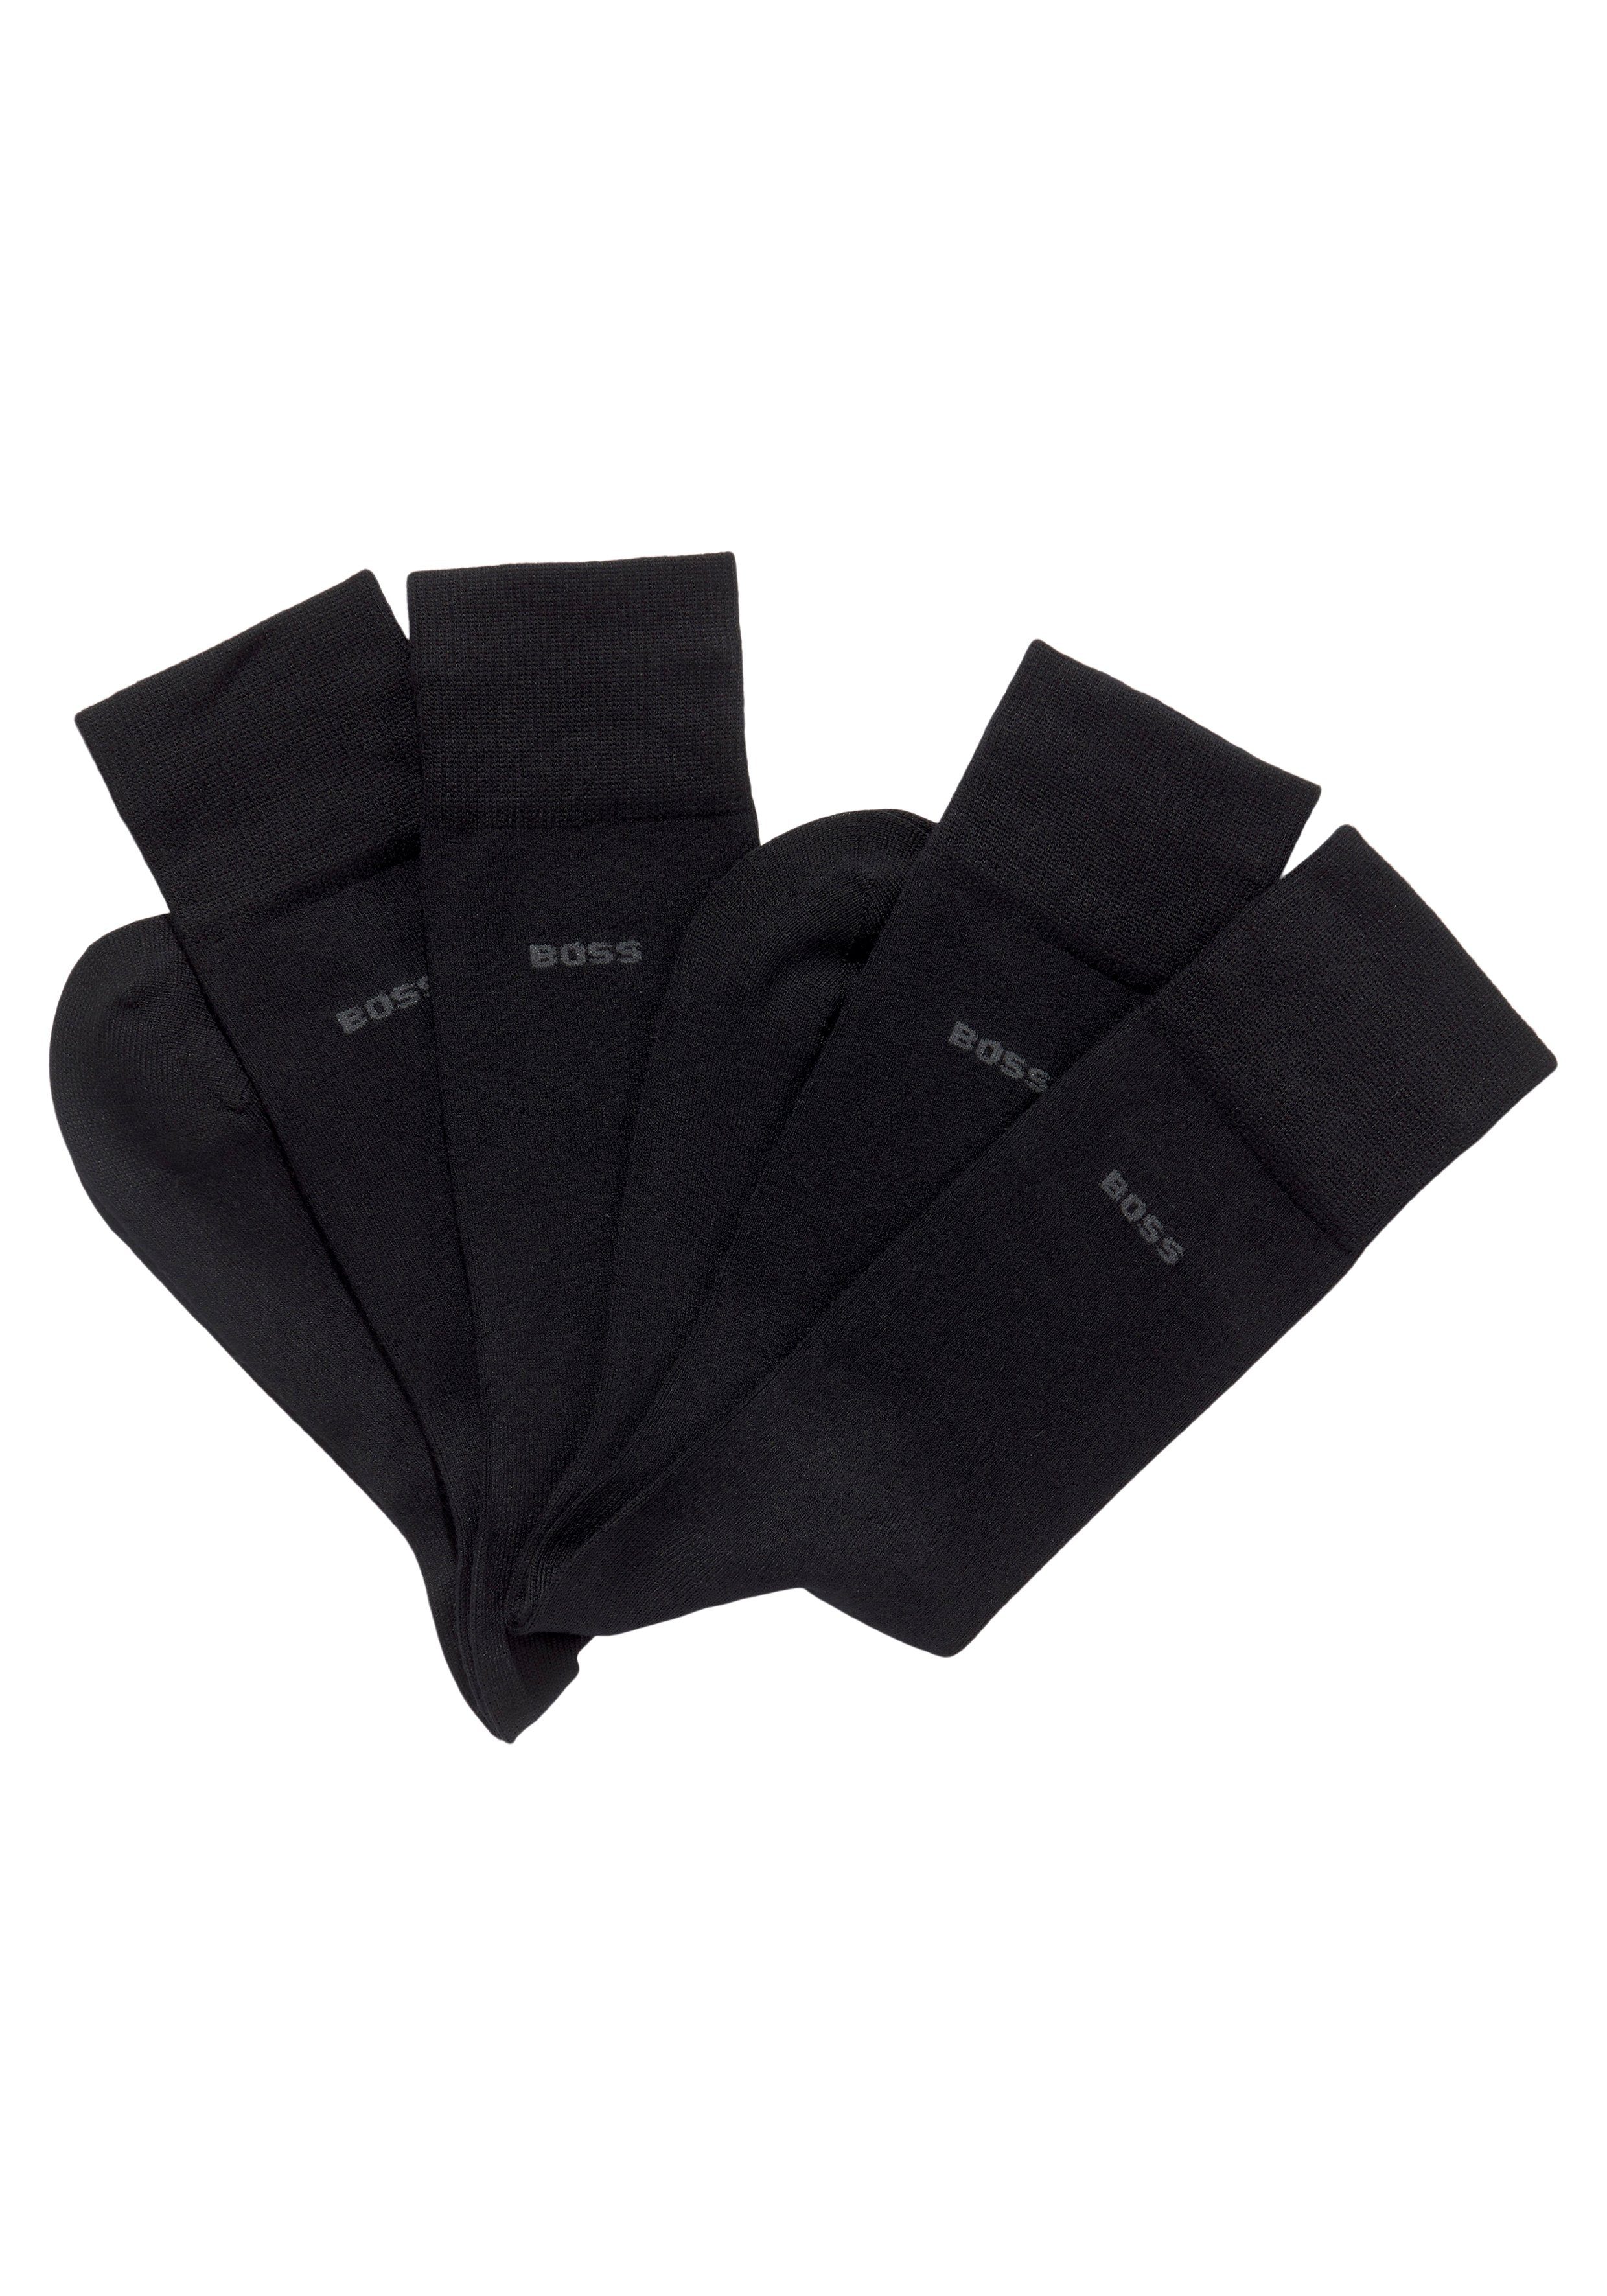 BOSS Socken 2P RS VI Bamboo (Packung, 2er Pack) mit eingesticktem Markenlogo